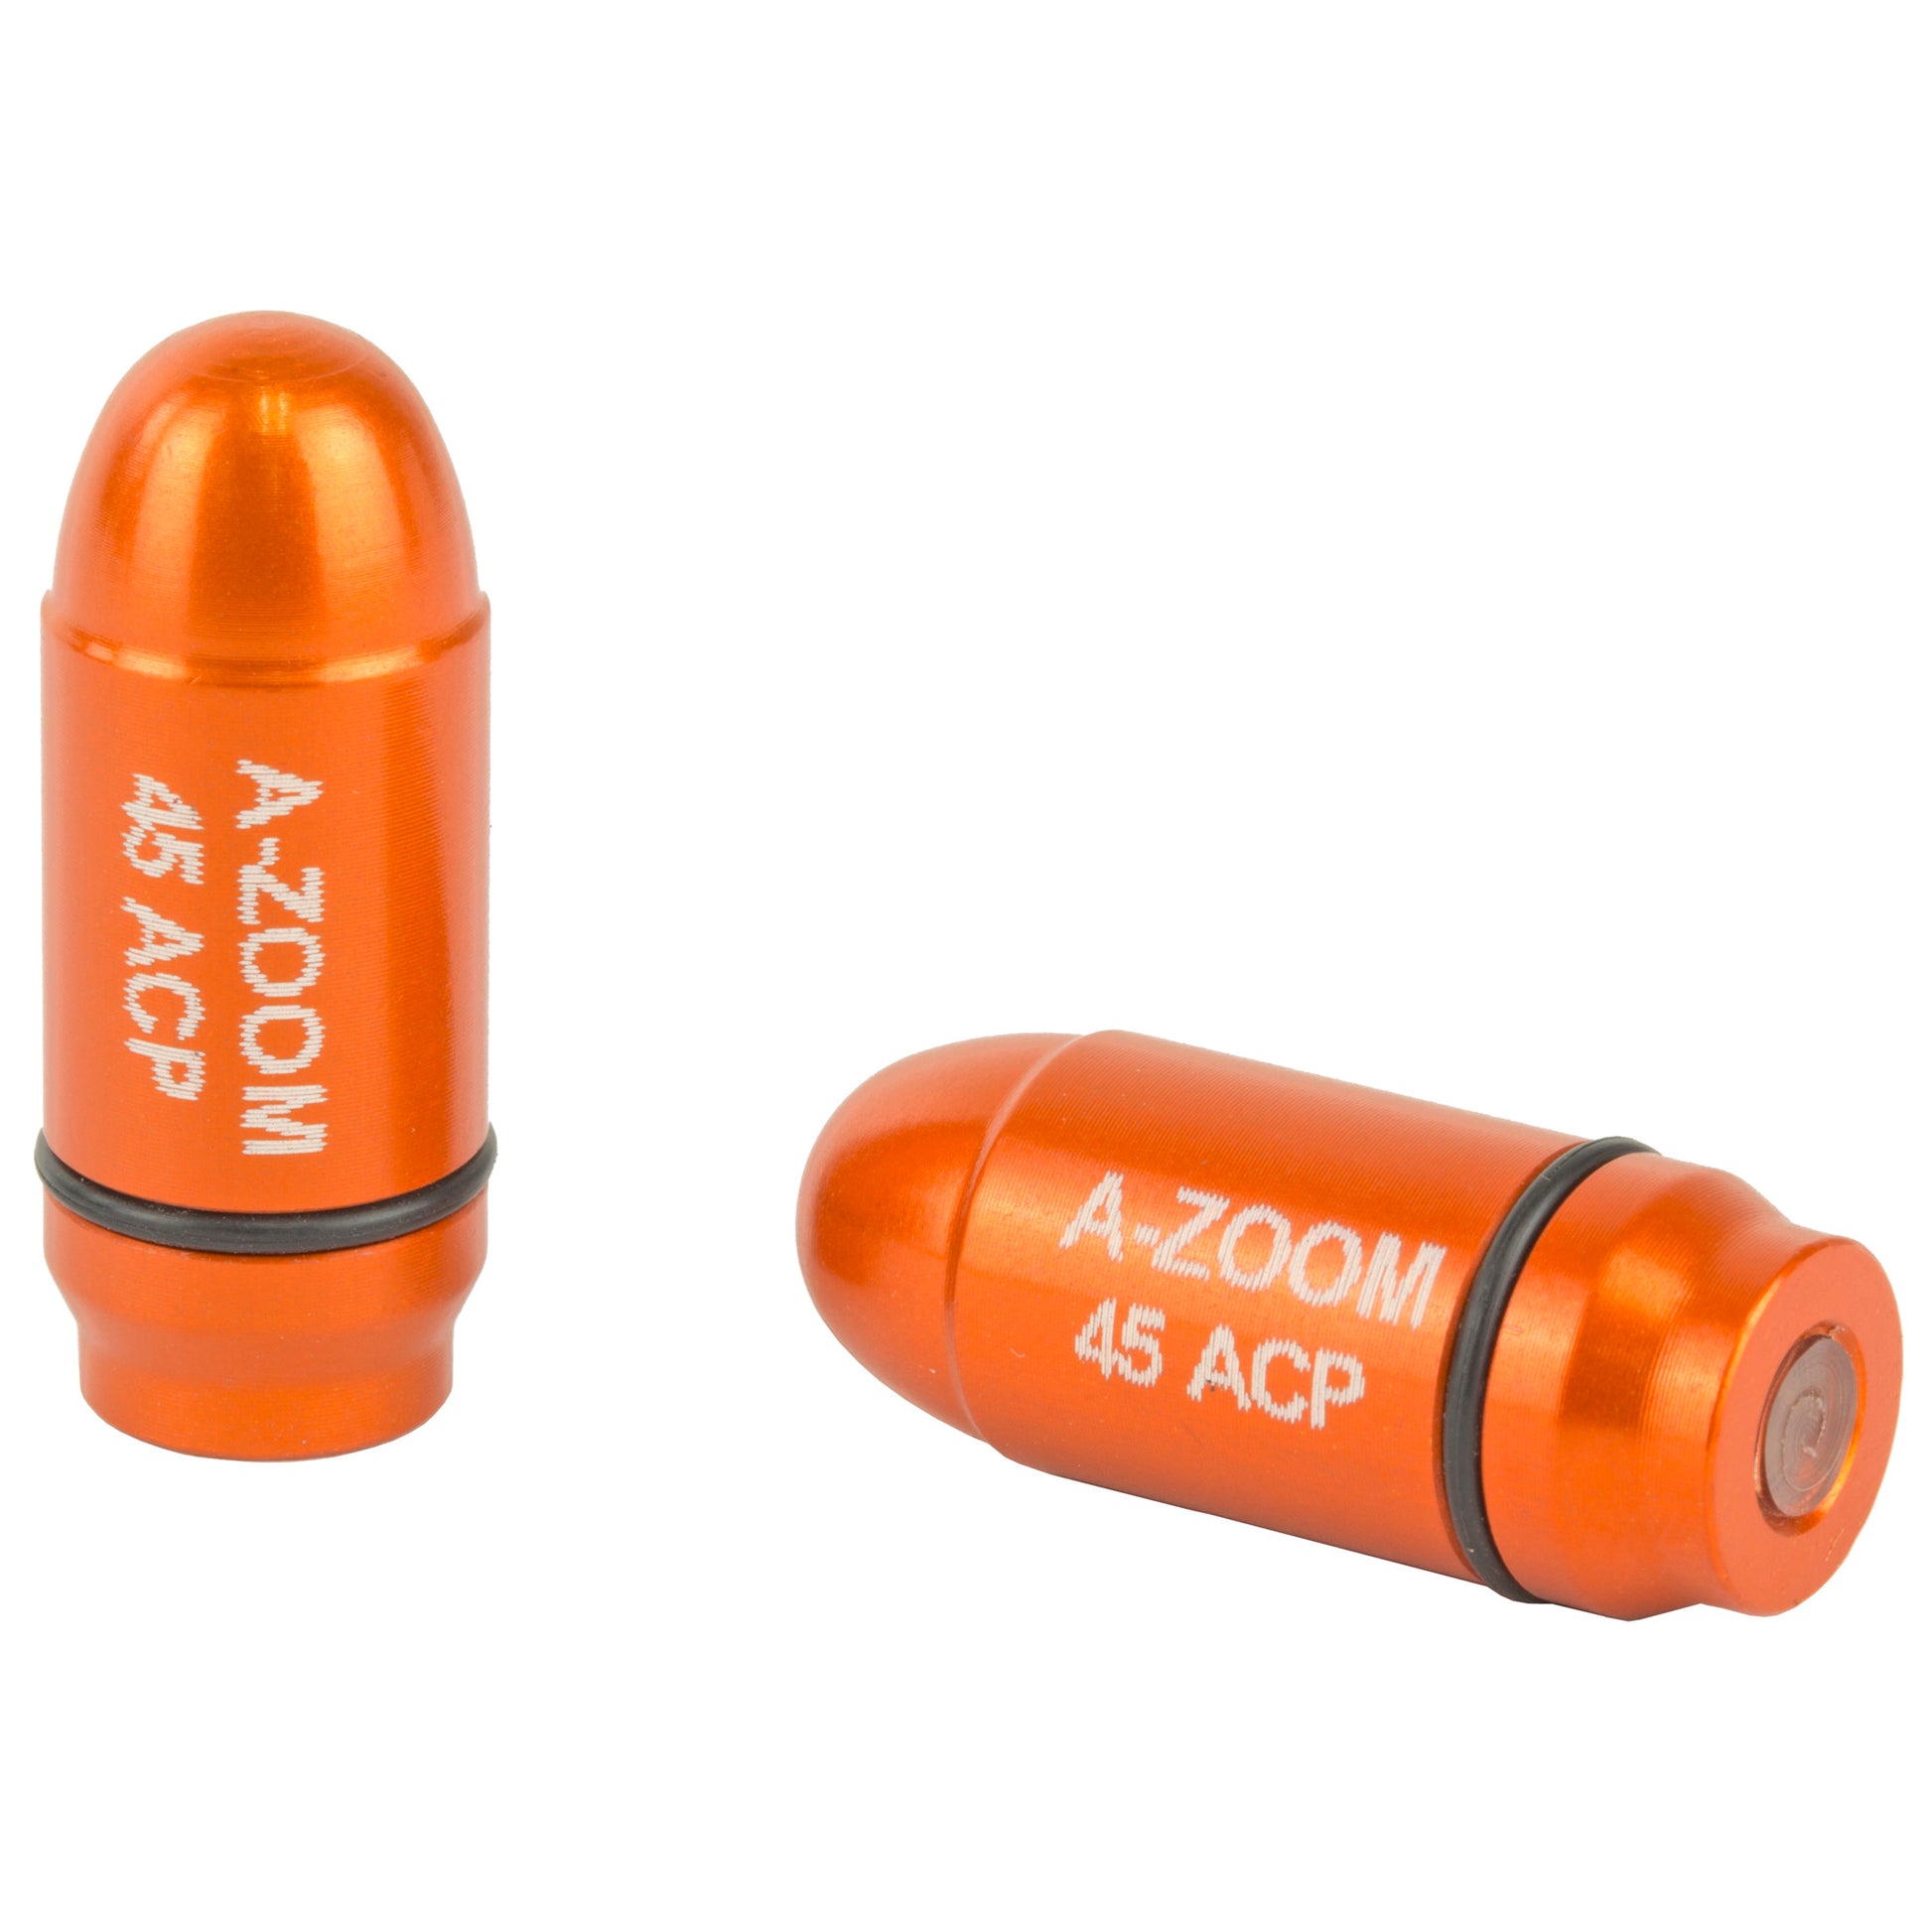 A-Zoom Strikercaps Snap Caps Orange Safety Training 9MM 2Pk solid aluminum 17102 - California Shooting Supplies